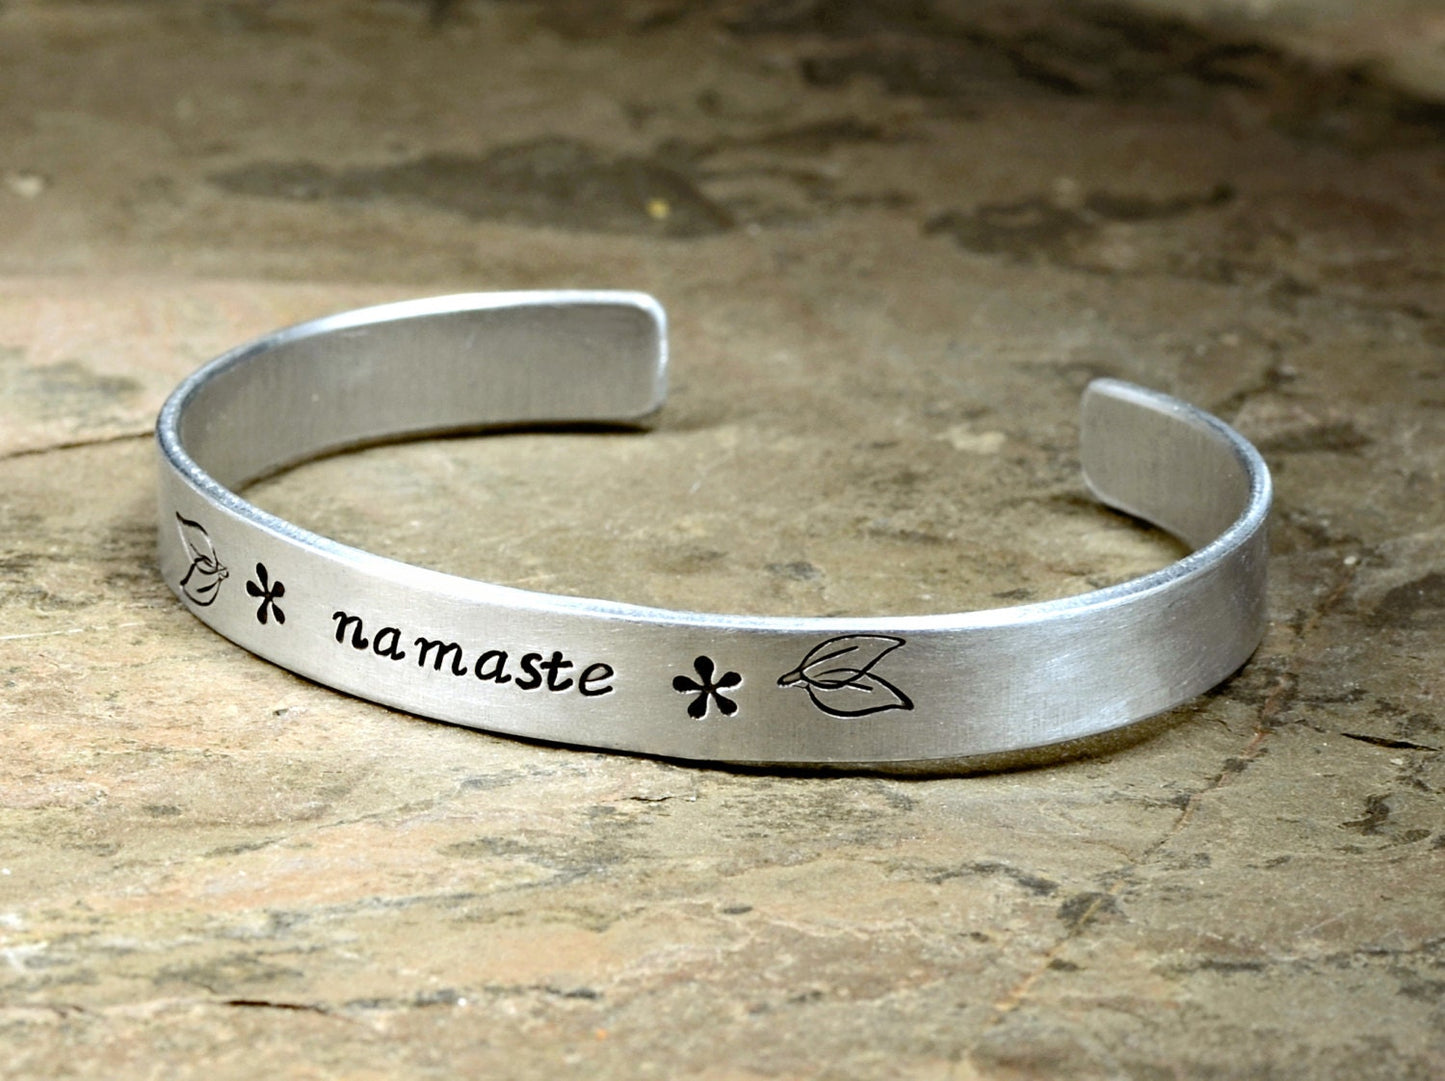 Namaste Yoga Cuff Bracelet in aluminum